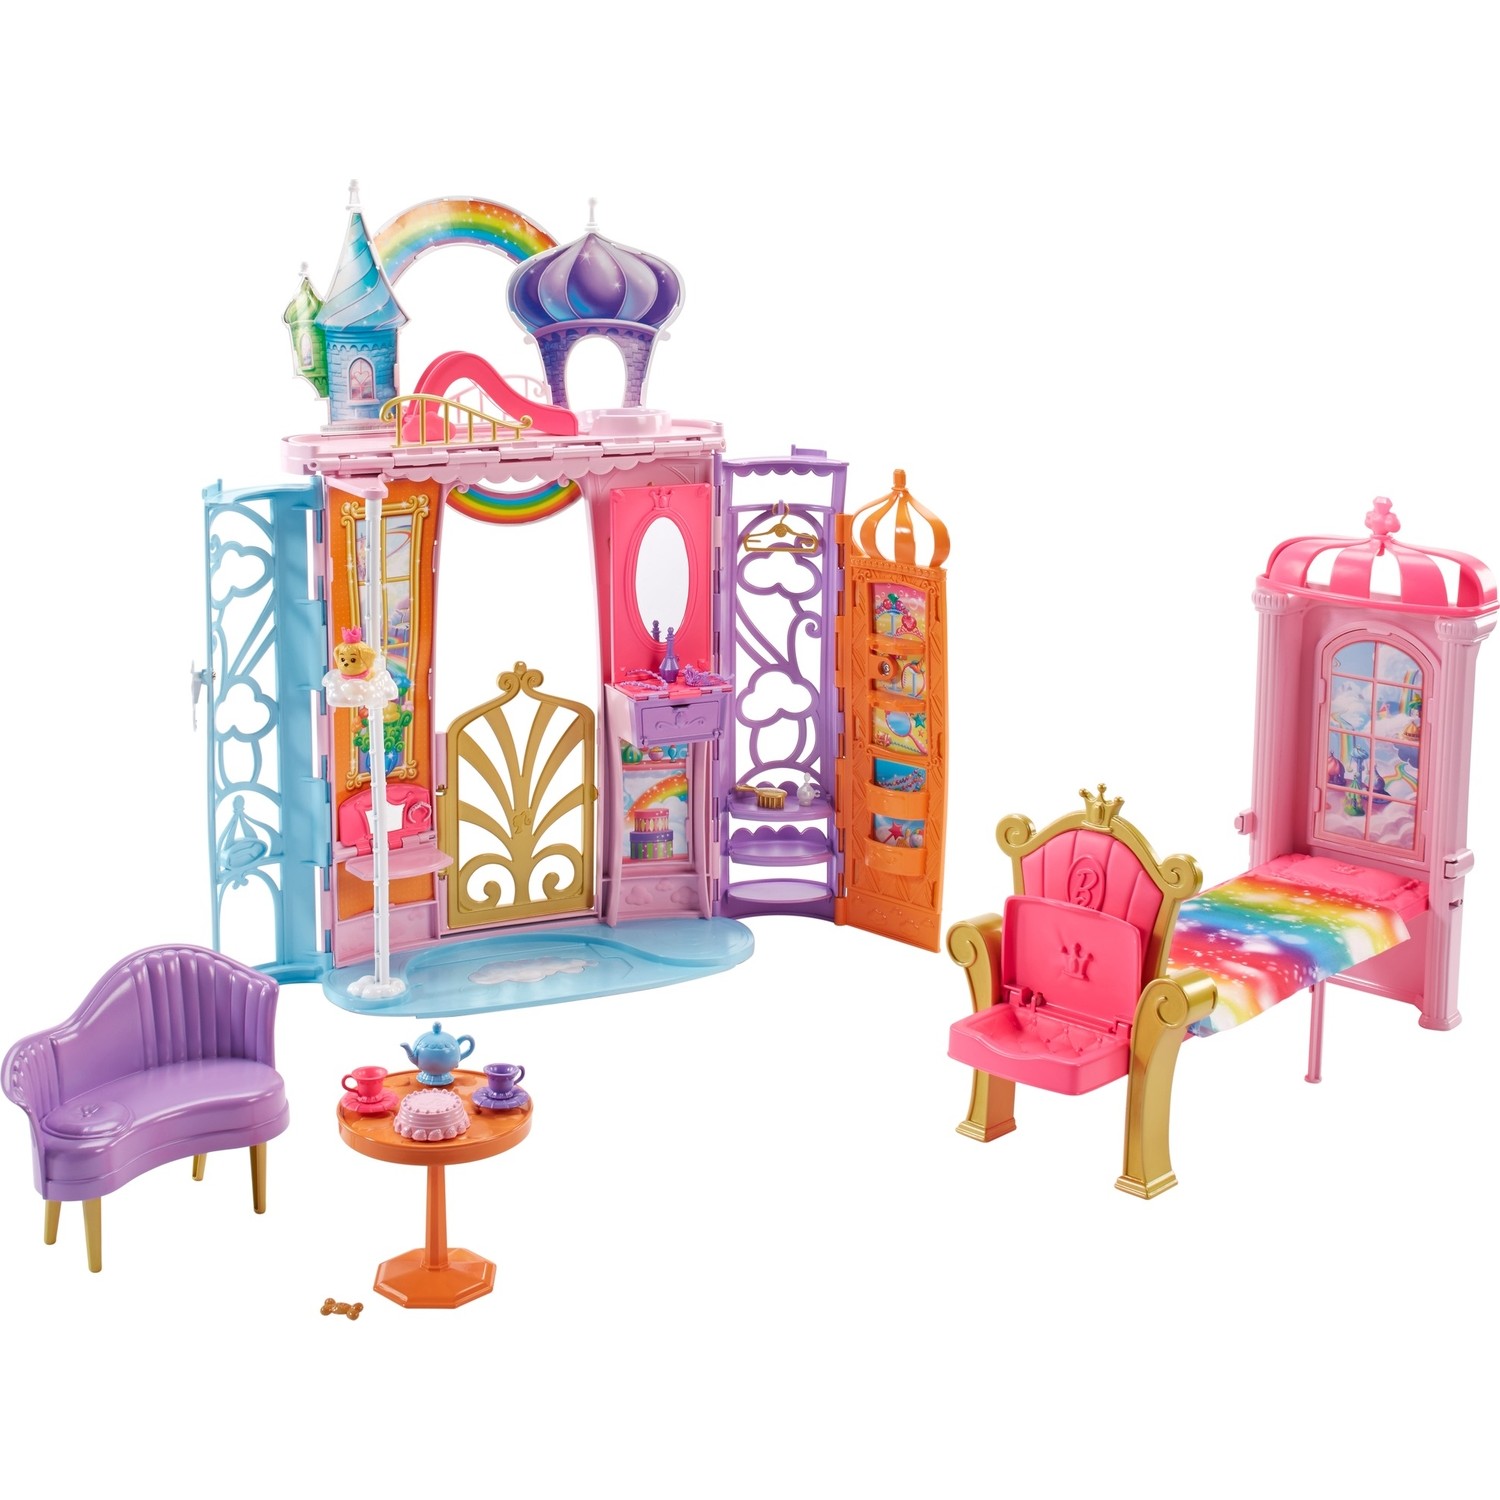 Игровой набор Barbie Dreamtopia Castle набор игровой barbie pets s2 dreamhouse